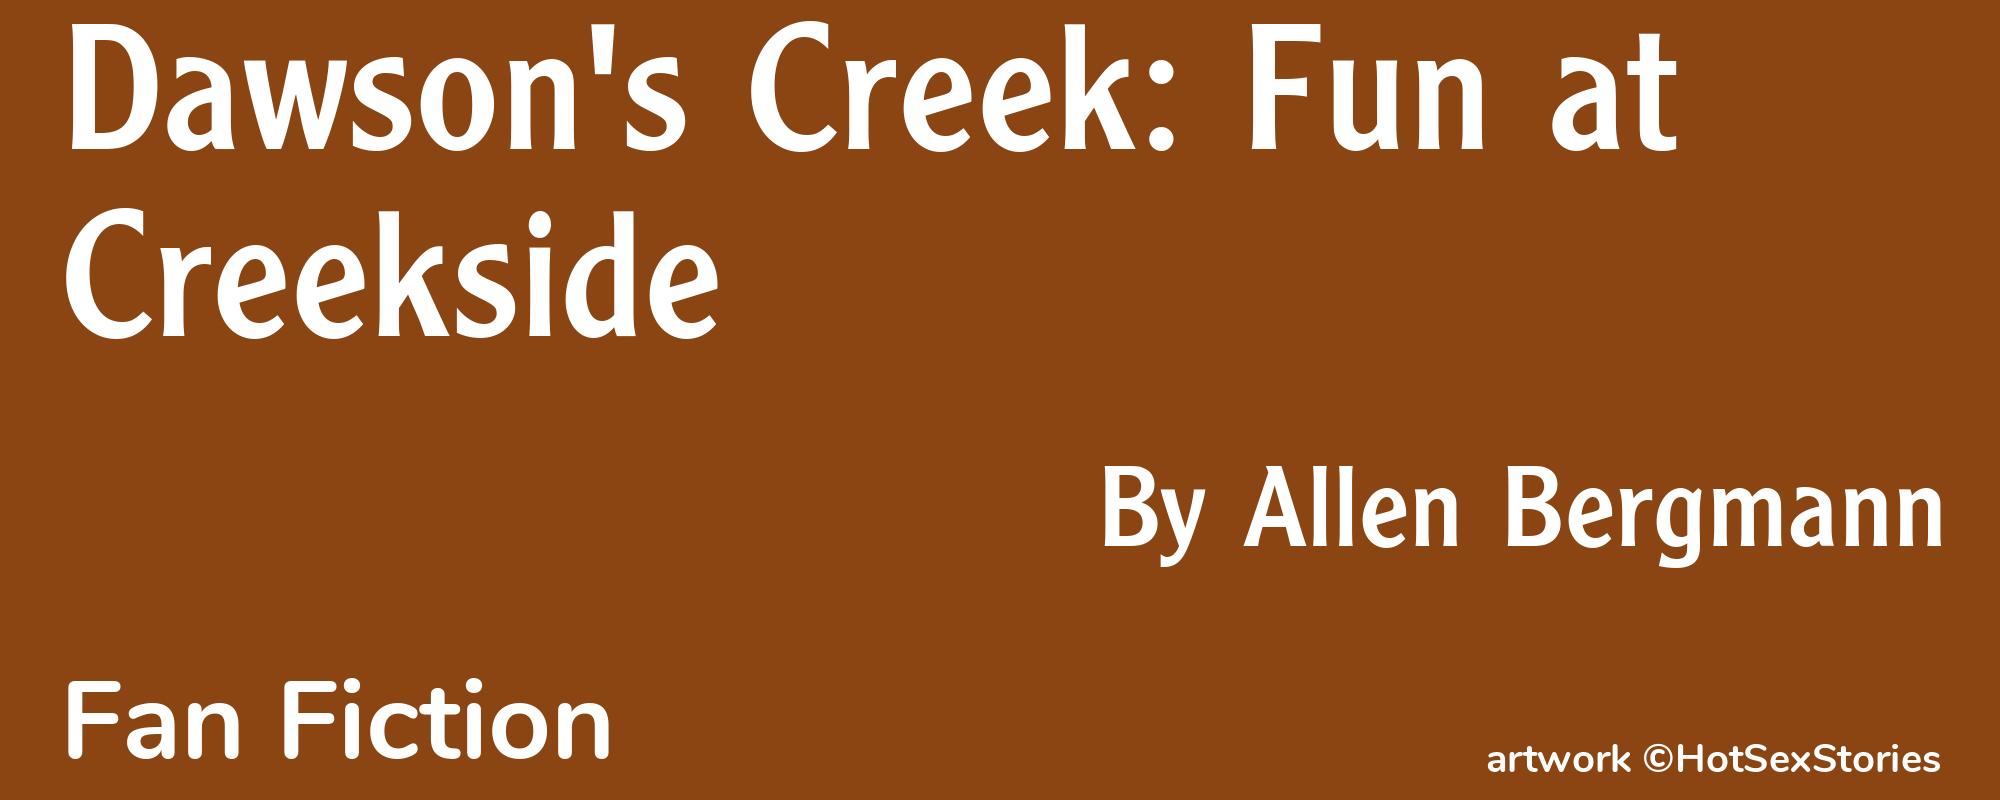 Dawson's Creek: Fun at Creekside - Cover